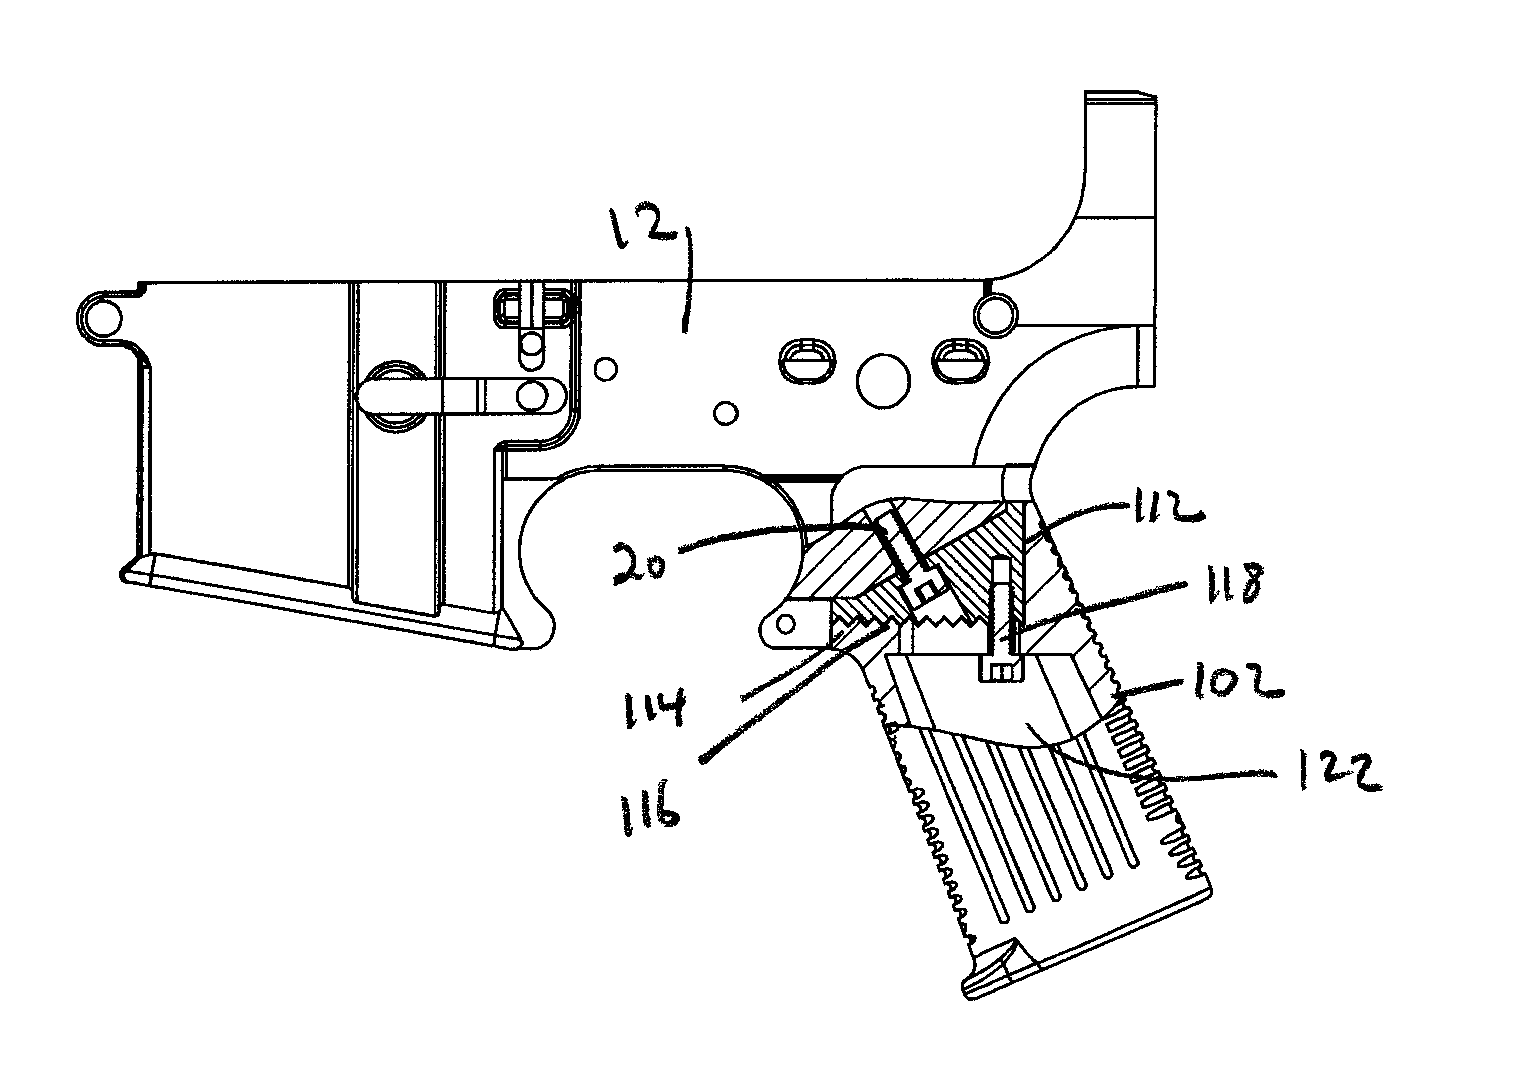 Adjustable pistol grip for firearms